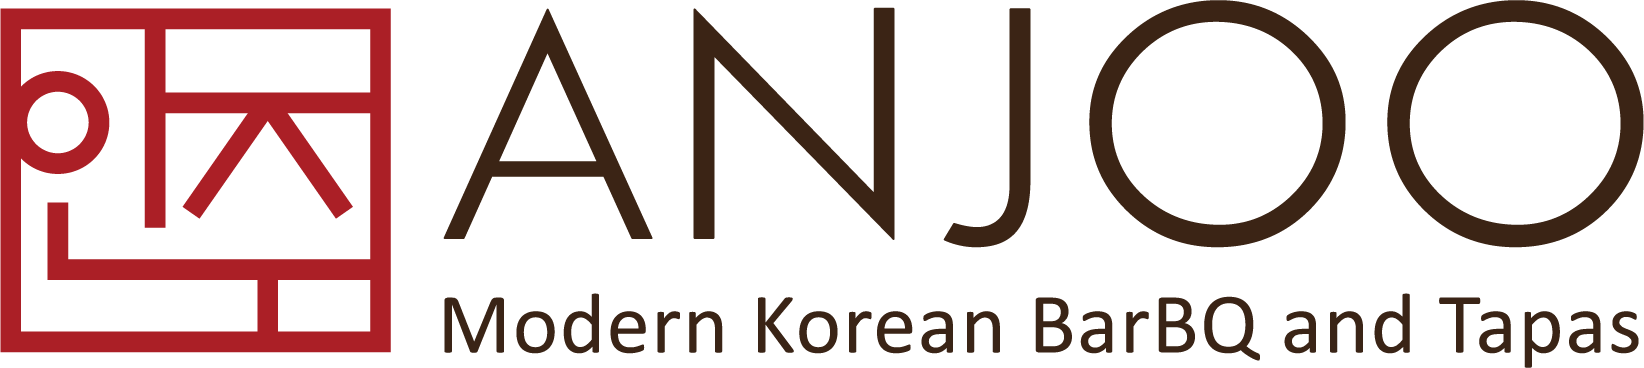 Anjoo Korean BBQ & Tapas – Authentic Korean Flavors in Suwanee